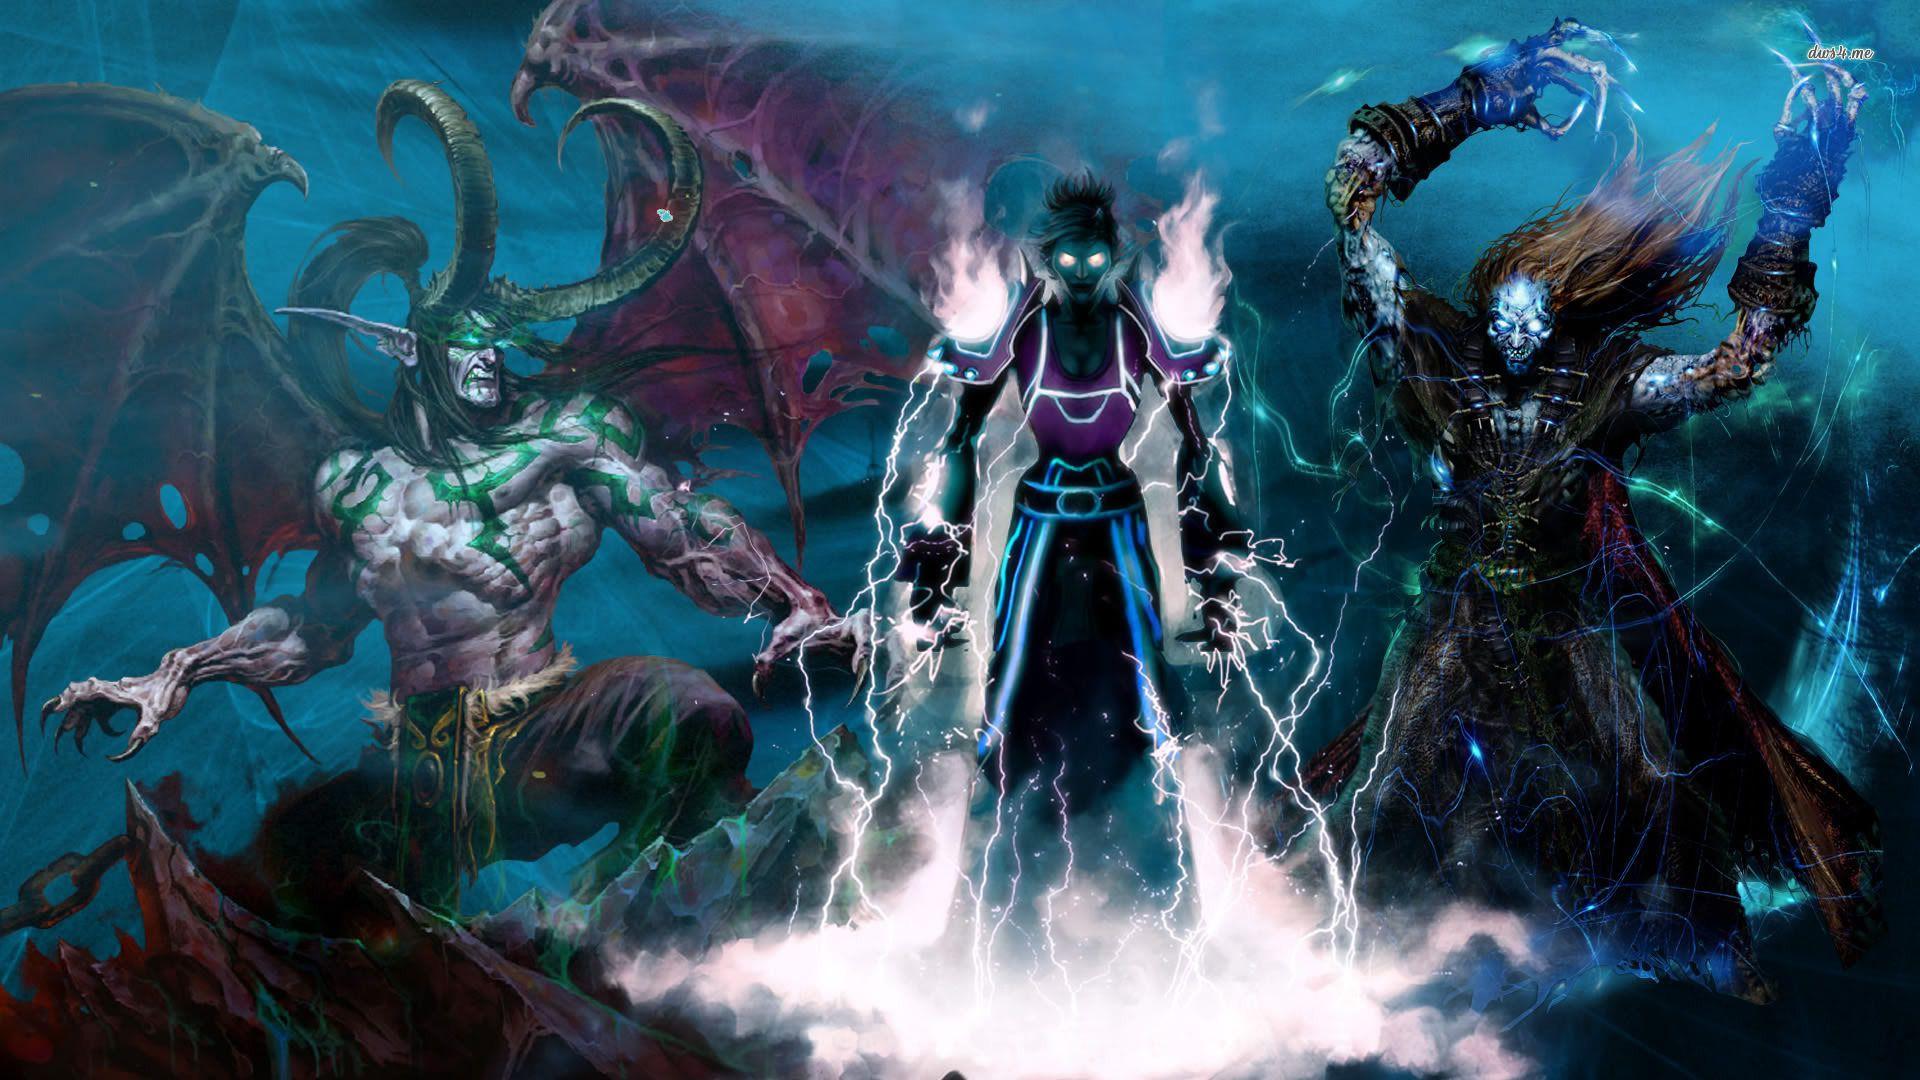 World of Warcraft wallpaper. Blizzard Entertainment